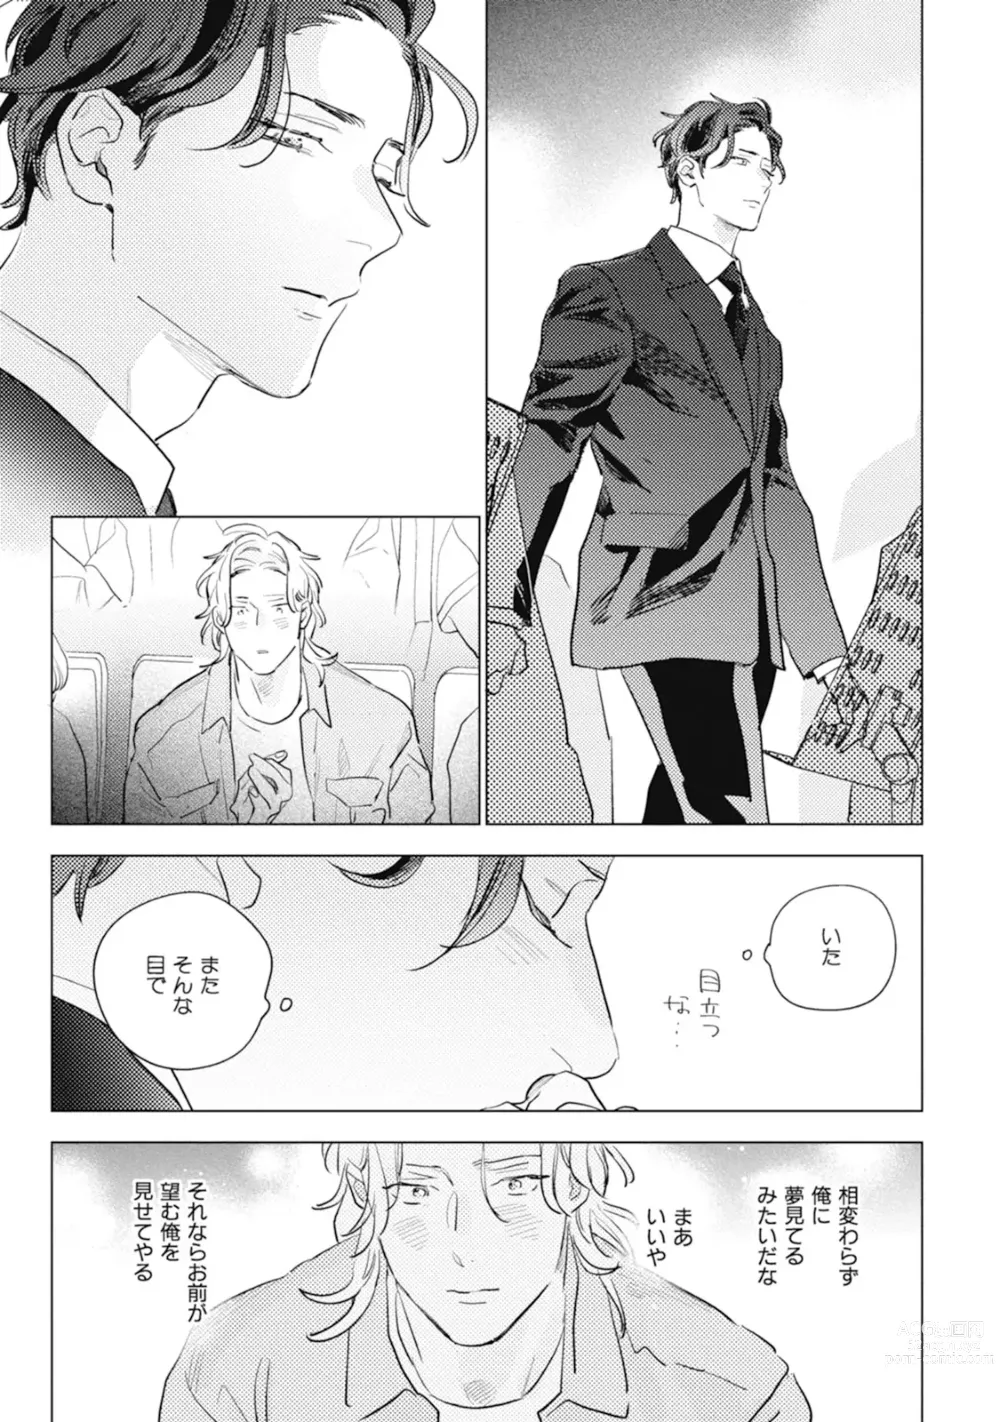 Page 199 of manga Kurikaeshi Ai no Oto